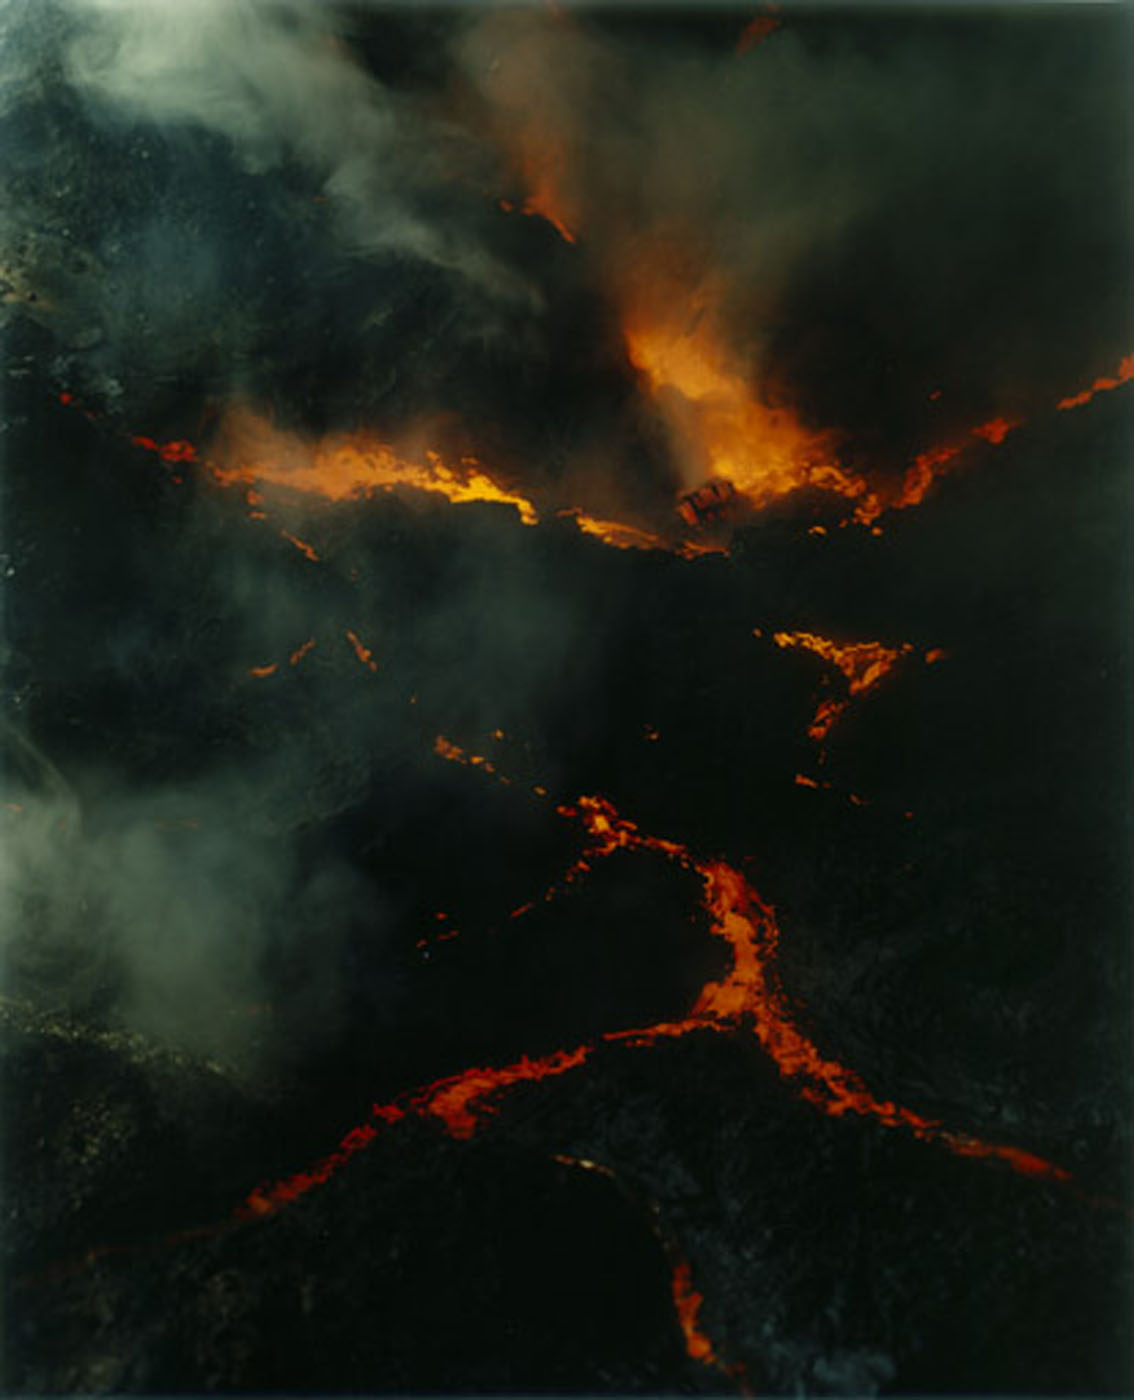 Sonja Braas, Lava Flow, 2005
C-print diasec, wood frame
185 x 155 cm
Edition of 8 + 2 AP